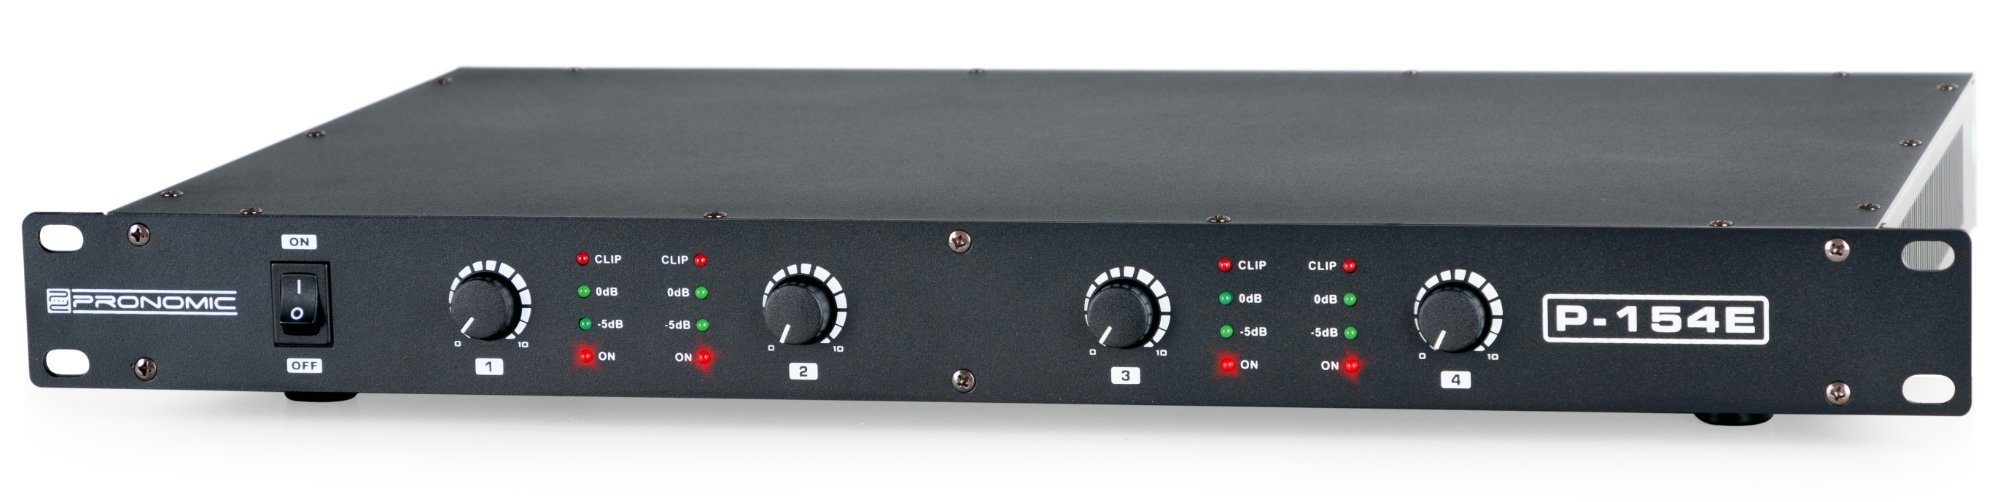 Pronomic P-154E MKII Endstufe 1HE Audioverstärker (Anzahl Kanäle: 4, 600 W,  geeignet für Monitor-Betrieb oder Studio/HiFi) | Verstärker